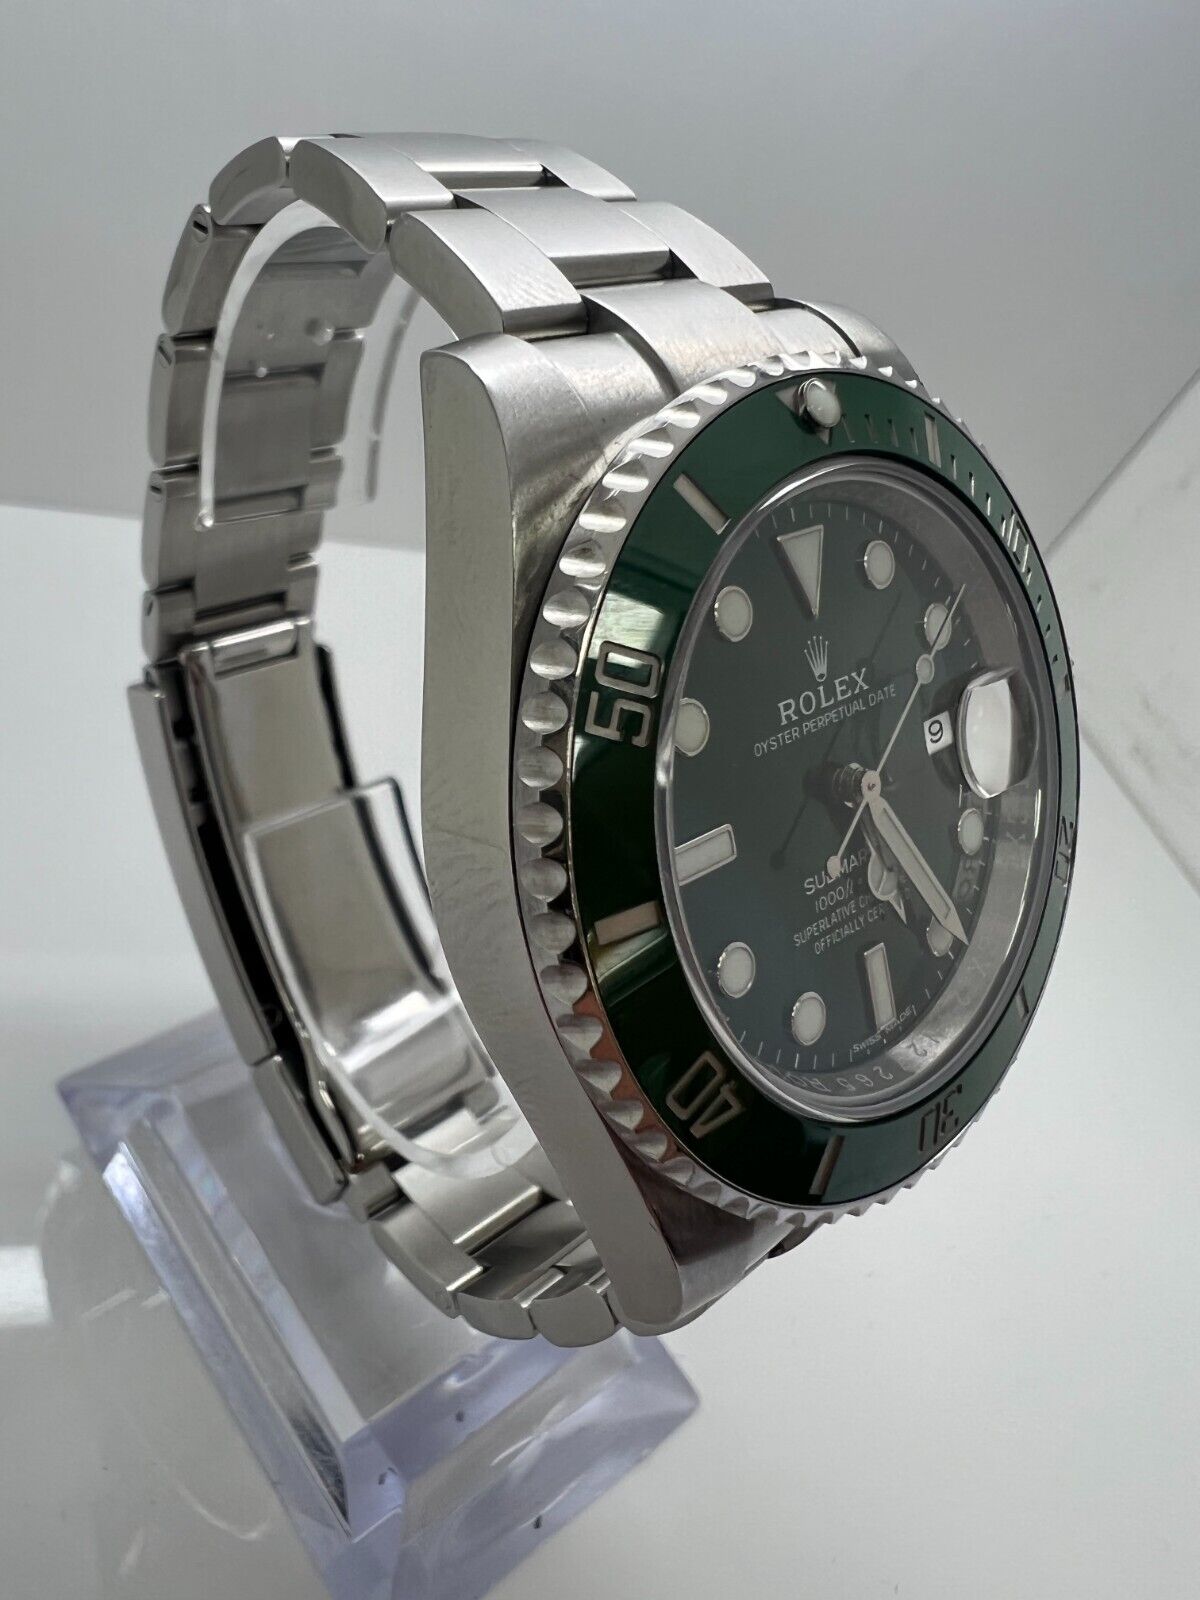 Rolex Submariner Hulk 116610LV Green Ceramic Bezel Watch Box Papers